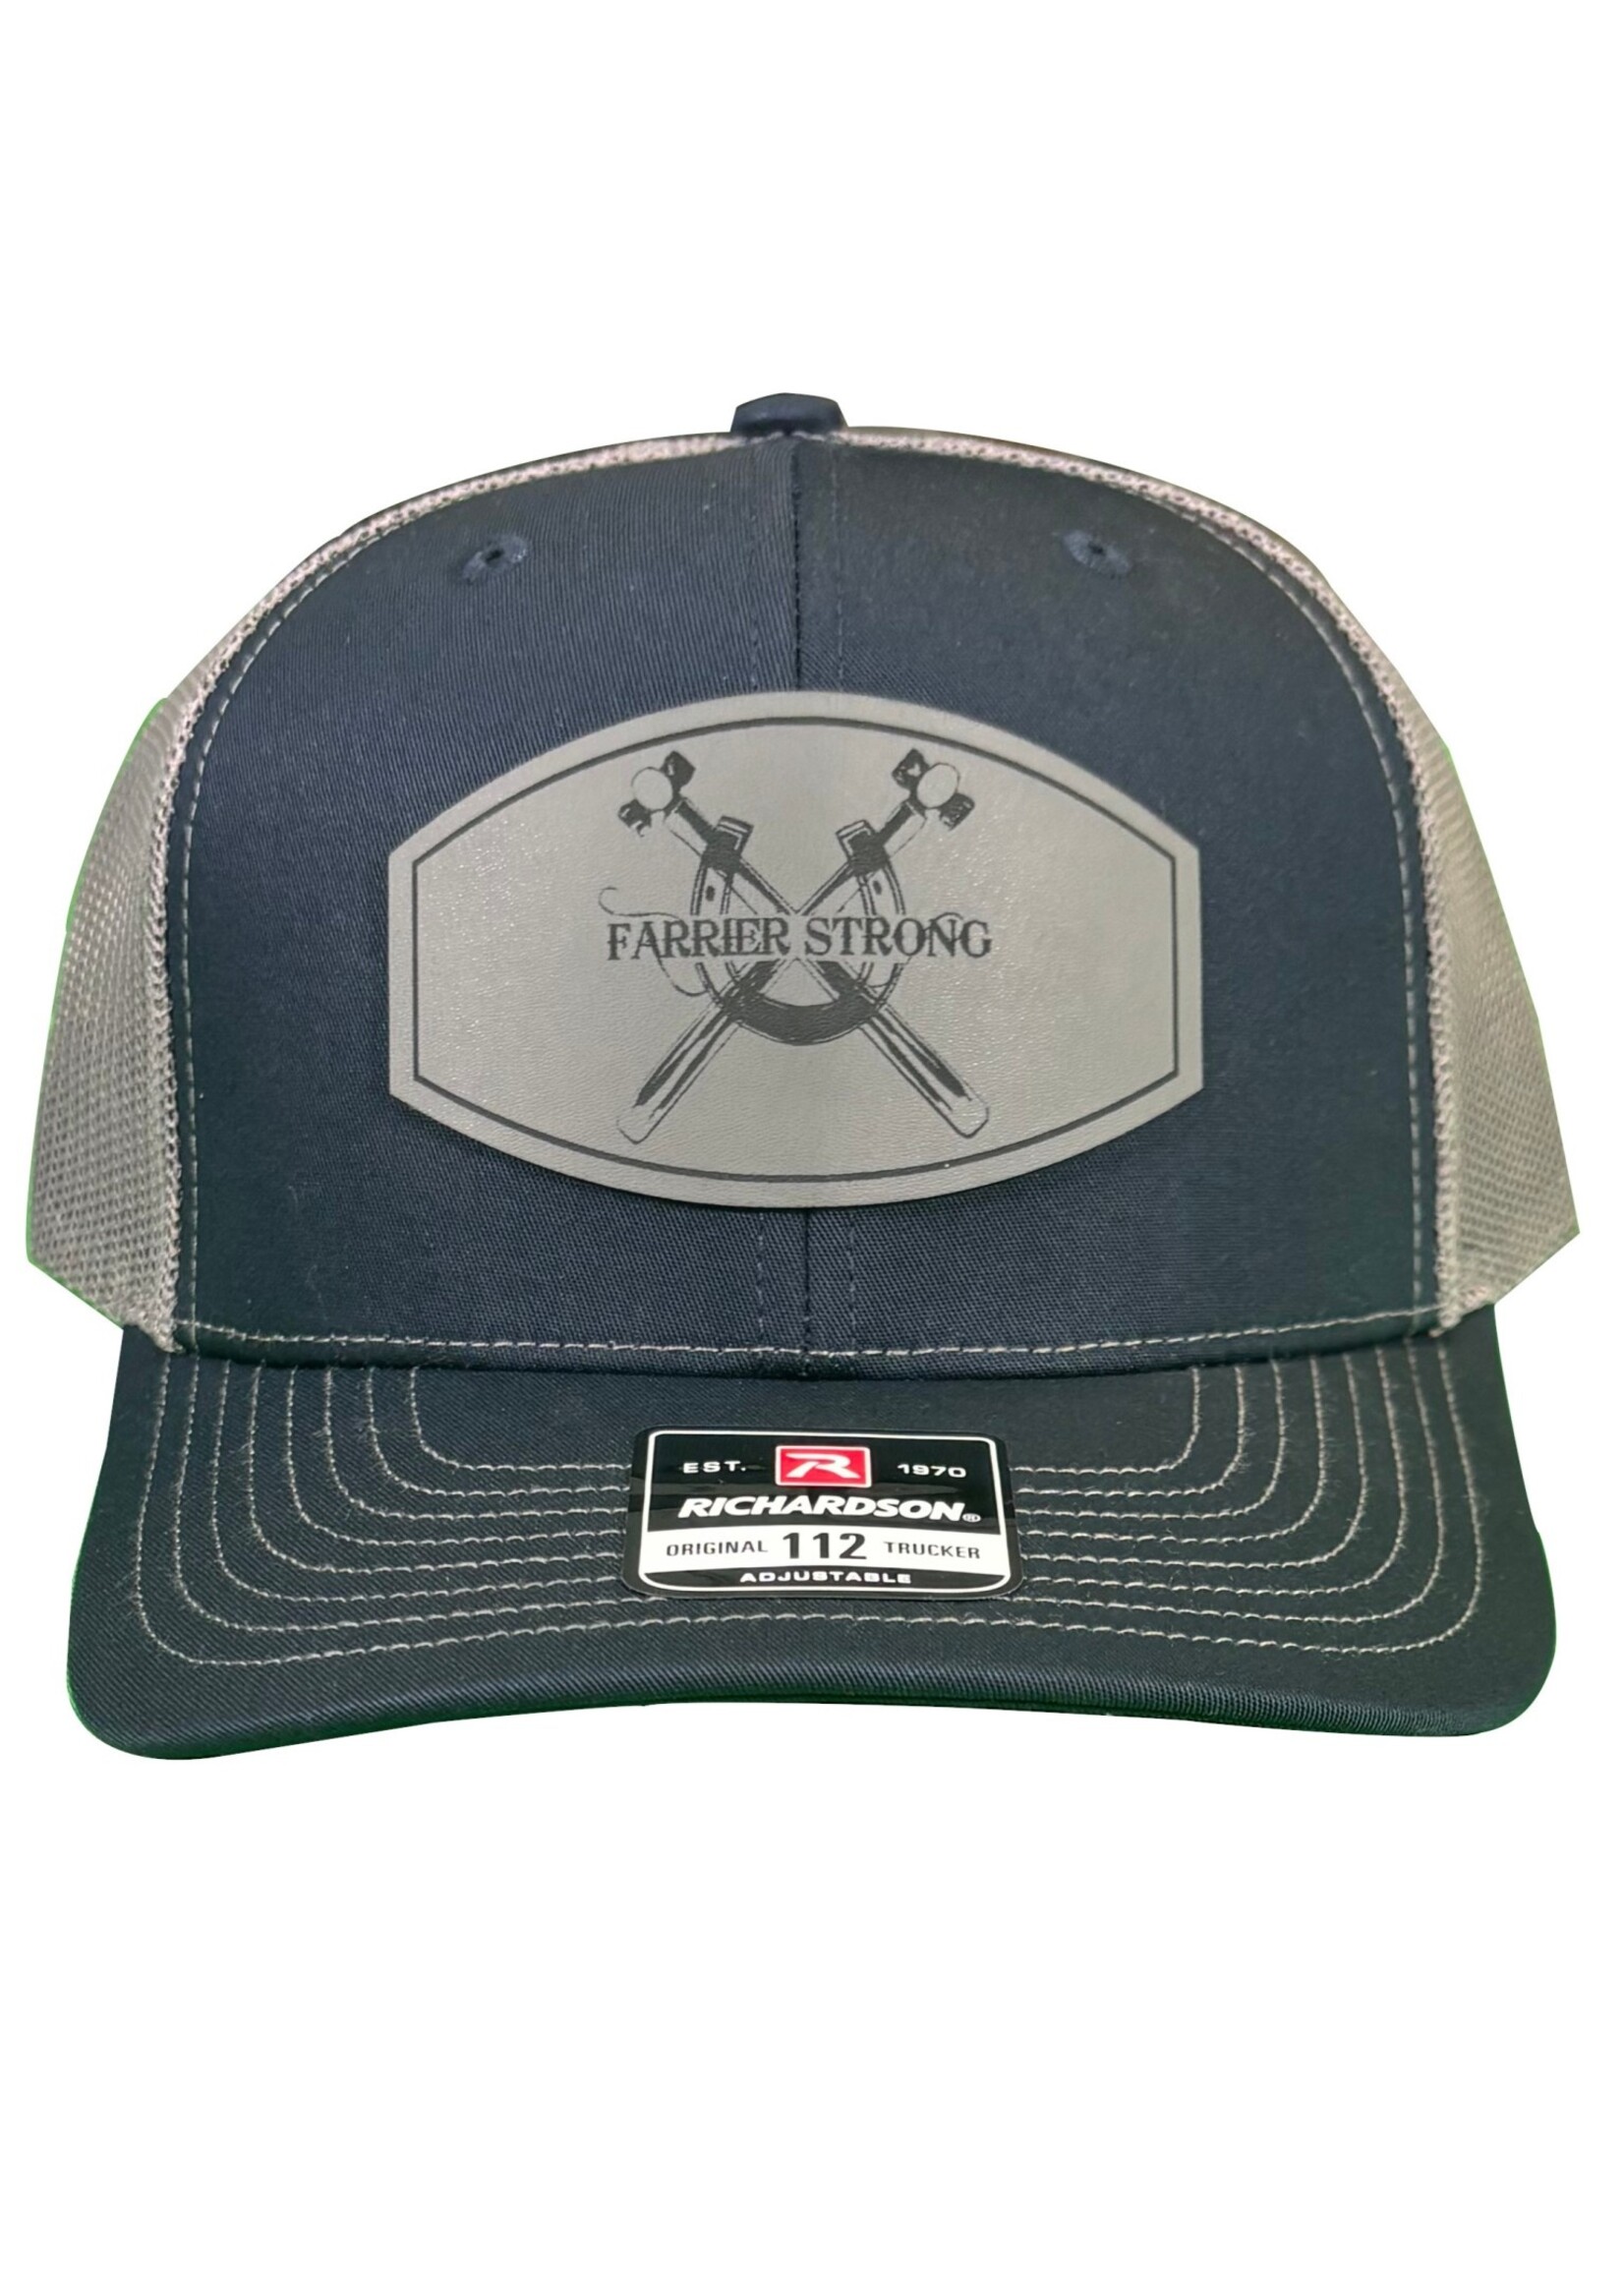 Farrier Strong Farrier Strong Trucker Hat, Richardson 112